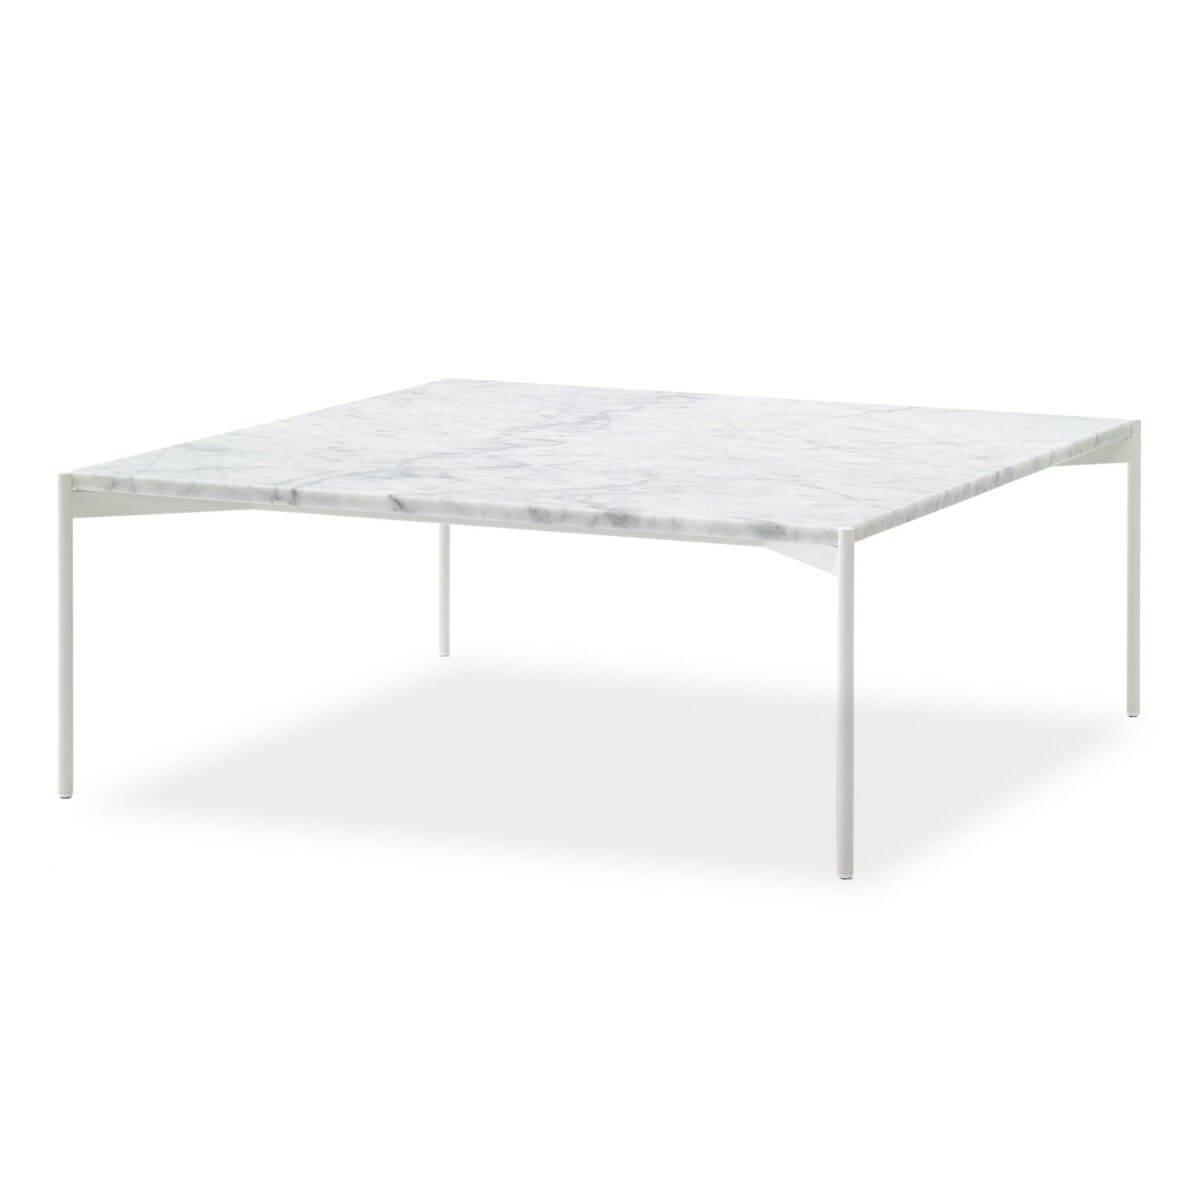 Plateau Table Stort White Carrara